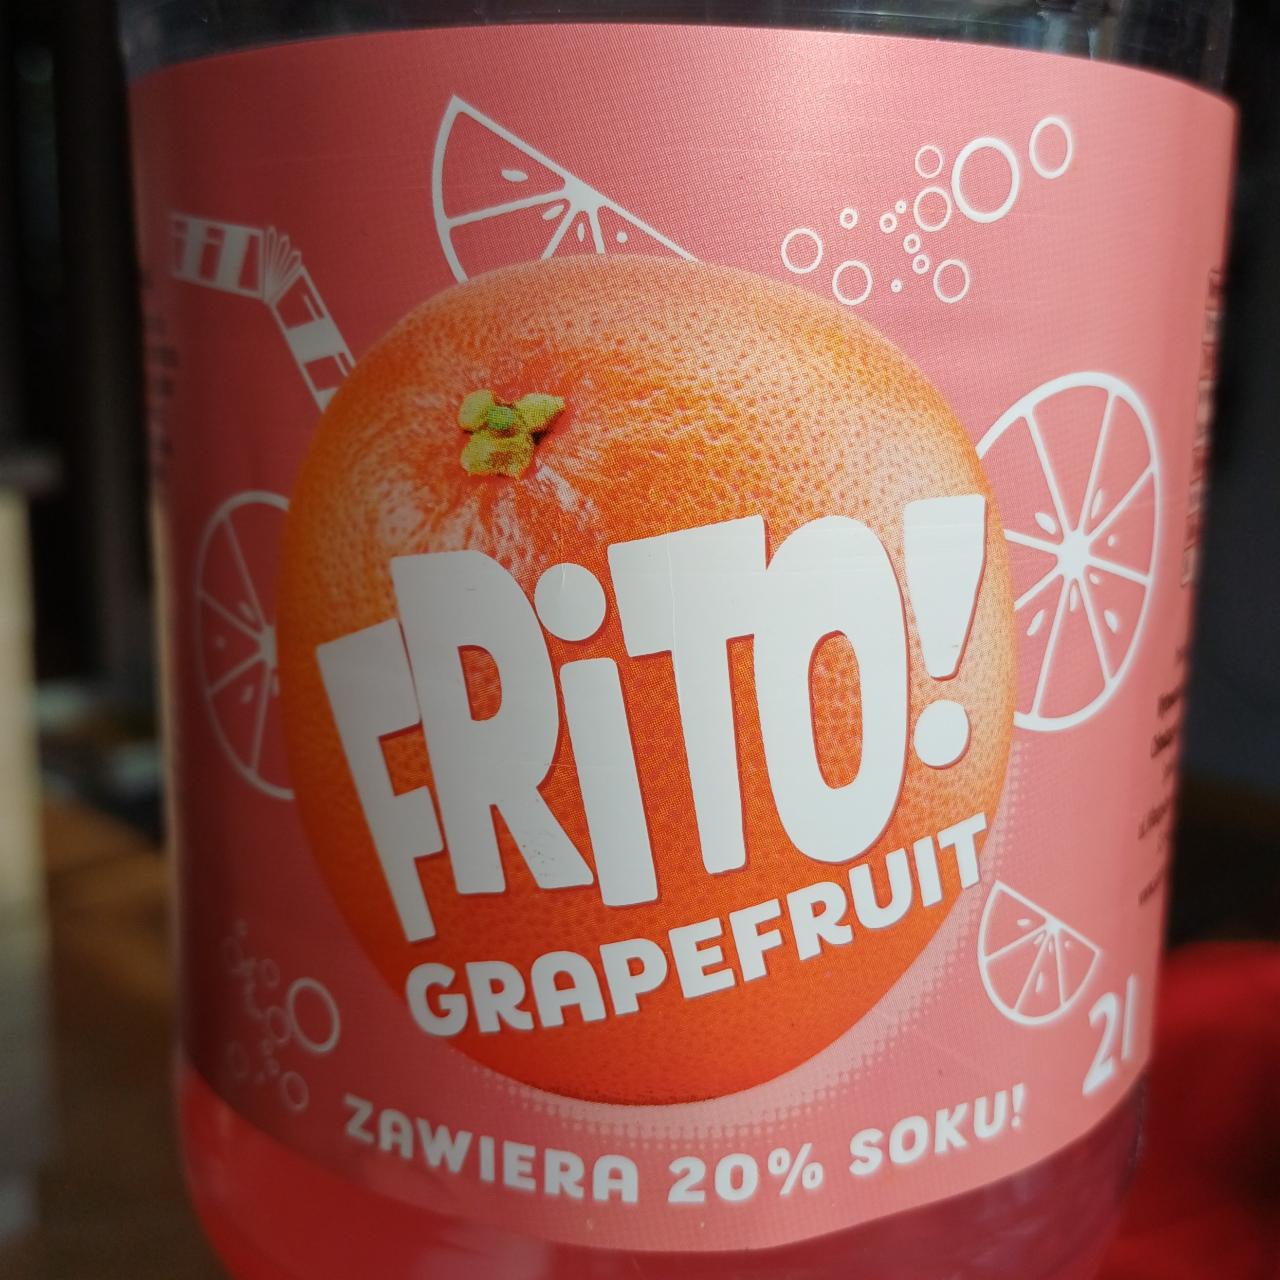 Zdjęcia - frito! grapefruit 